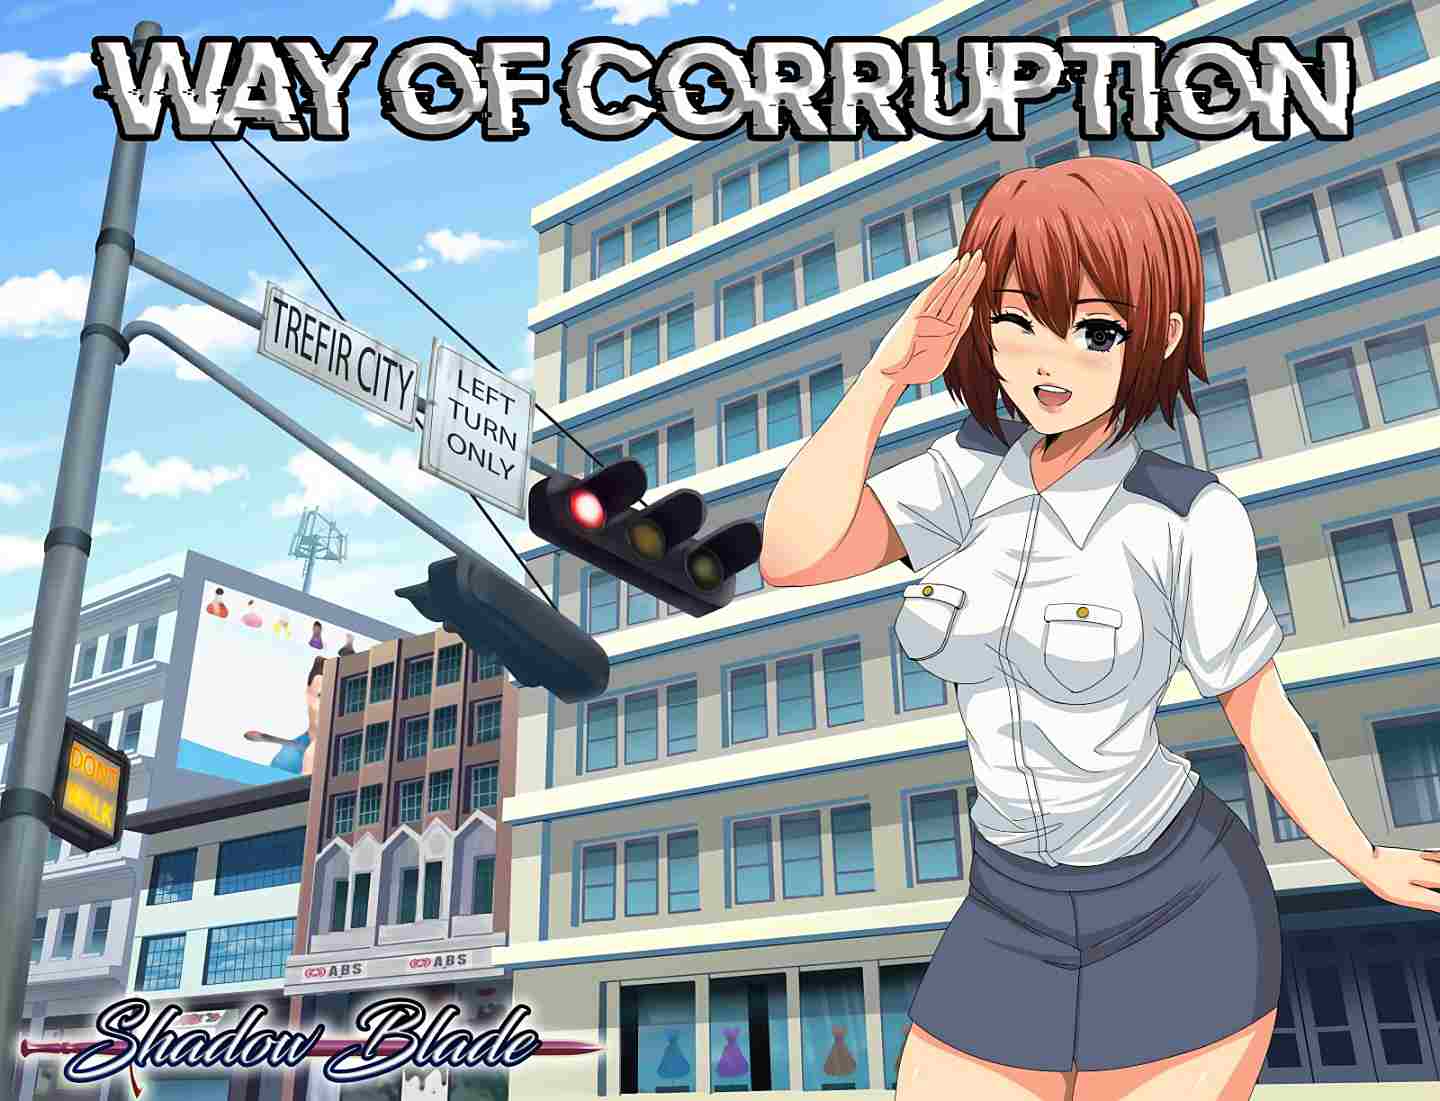 Way of Corruption